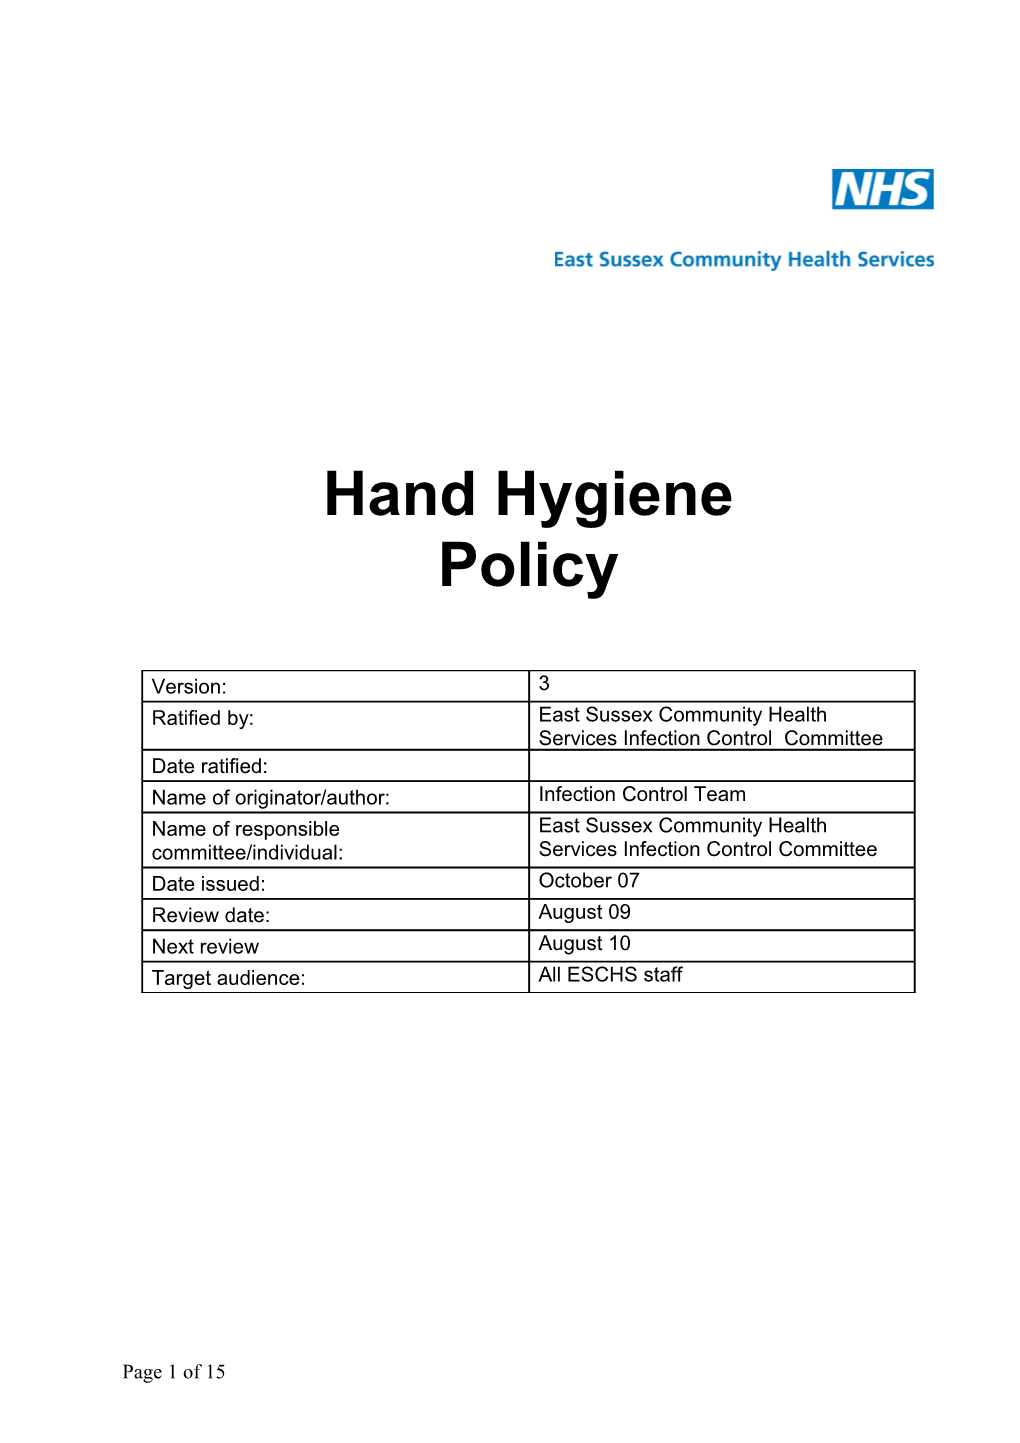 Hand Hygiene Policy